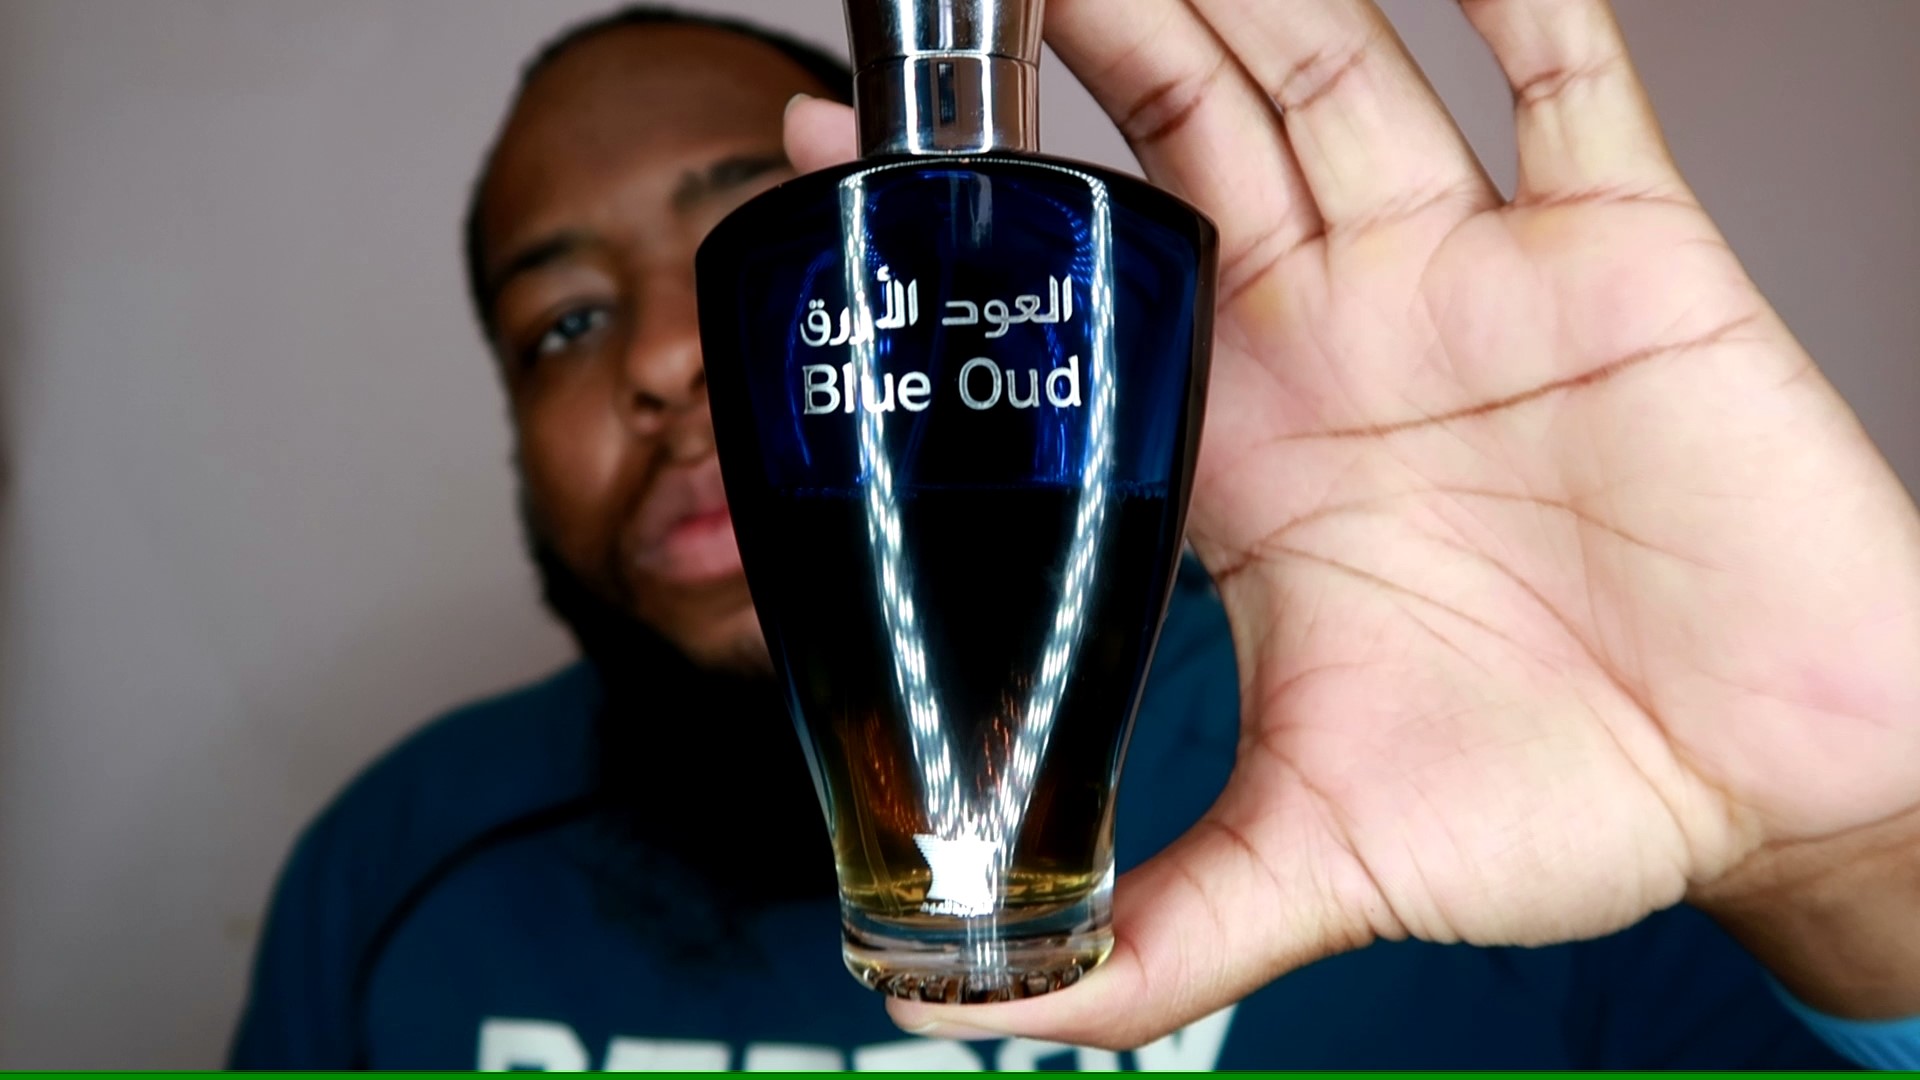 Blue Oud